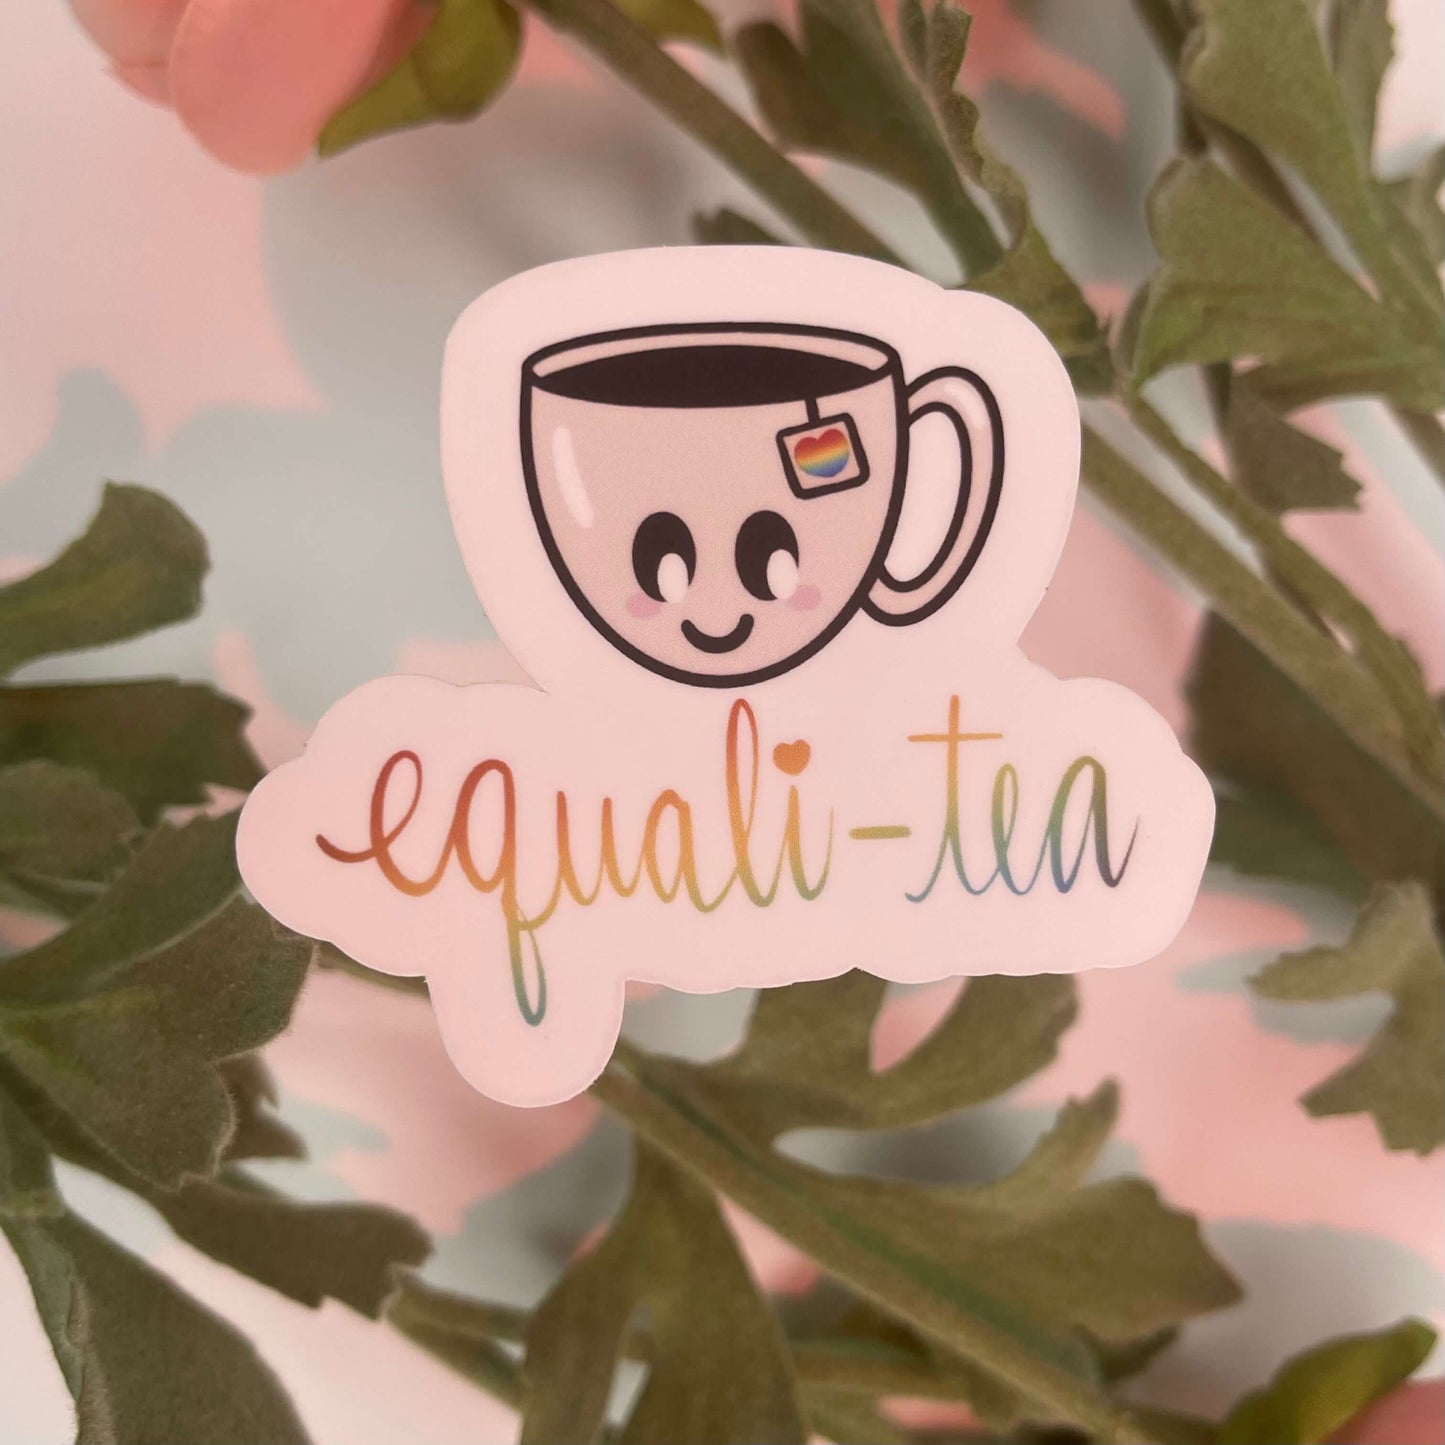 equali-tea sticker